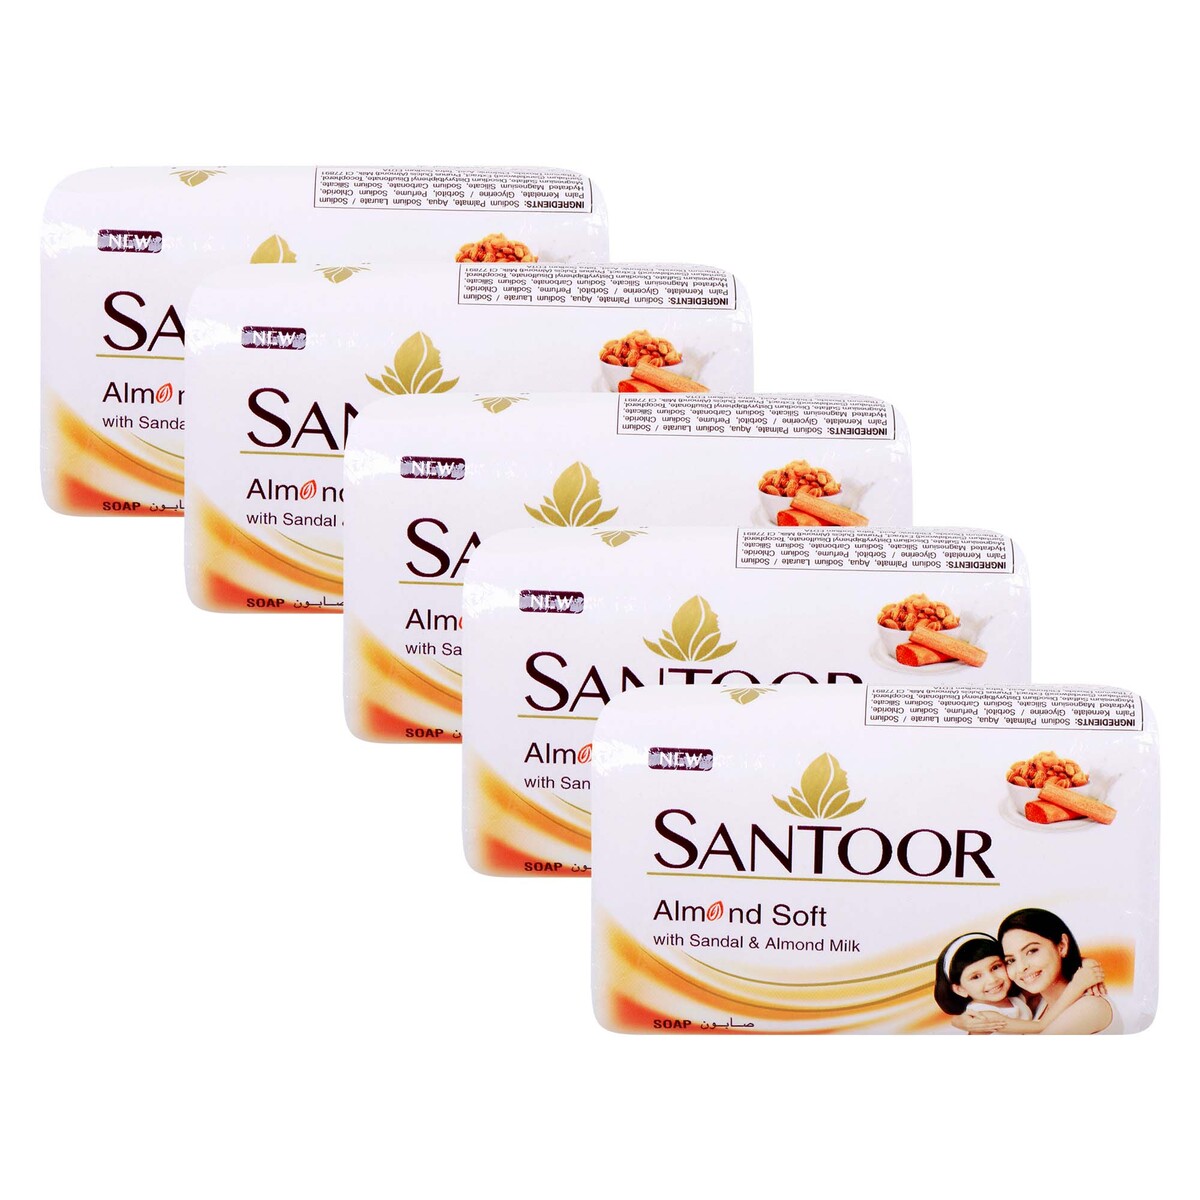 Santoor Bath Soap Almond Soft with Sandal & Almond Milk, 5 x 125 g